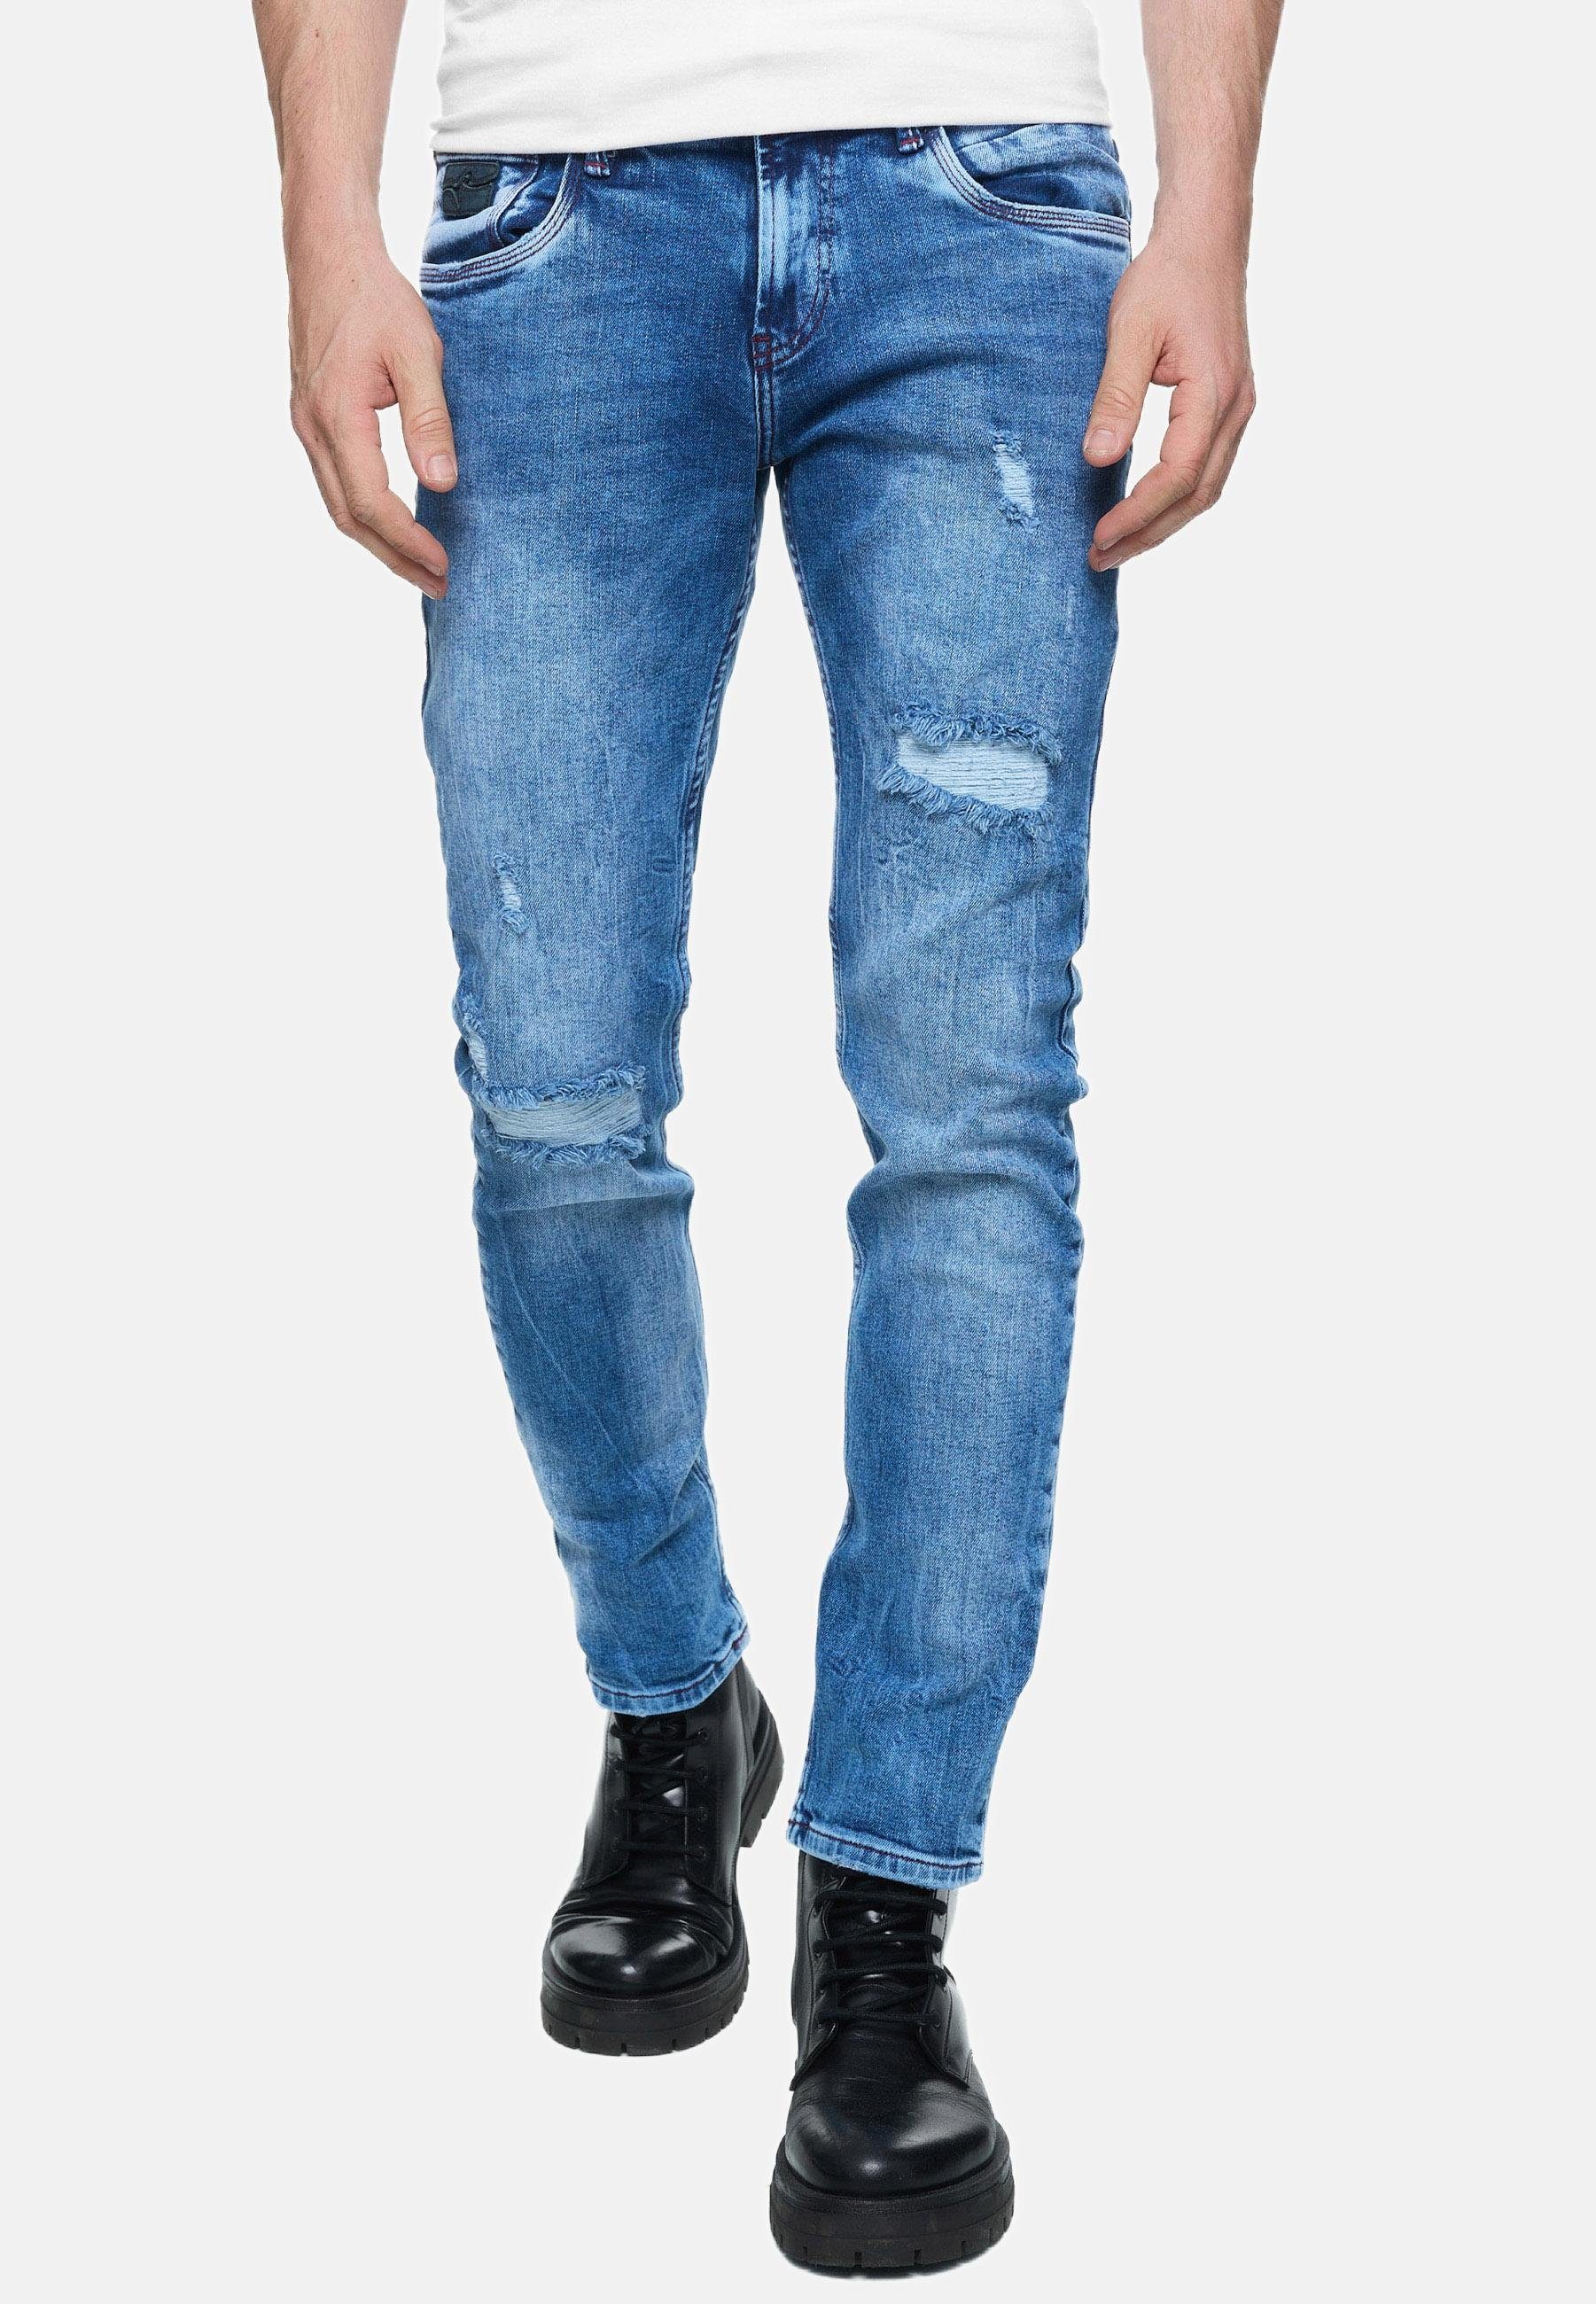 Rusty Neal Straight-Jeans TORI hellblau Waschung dezenter mit